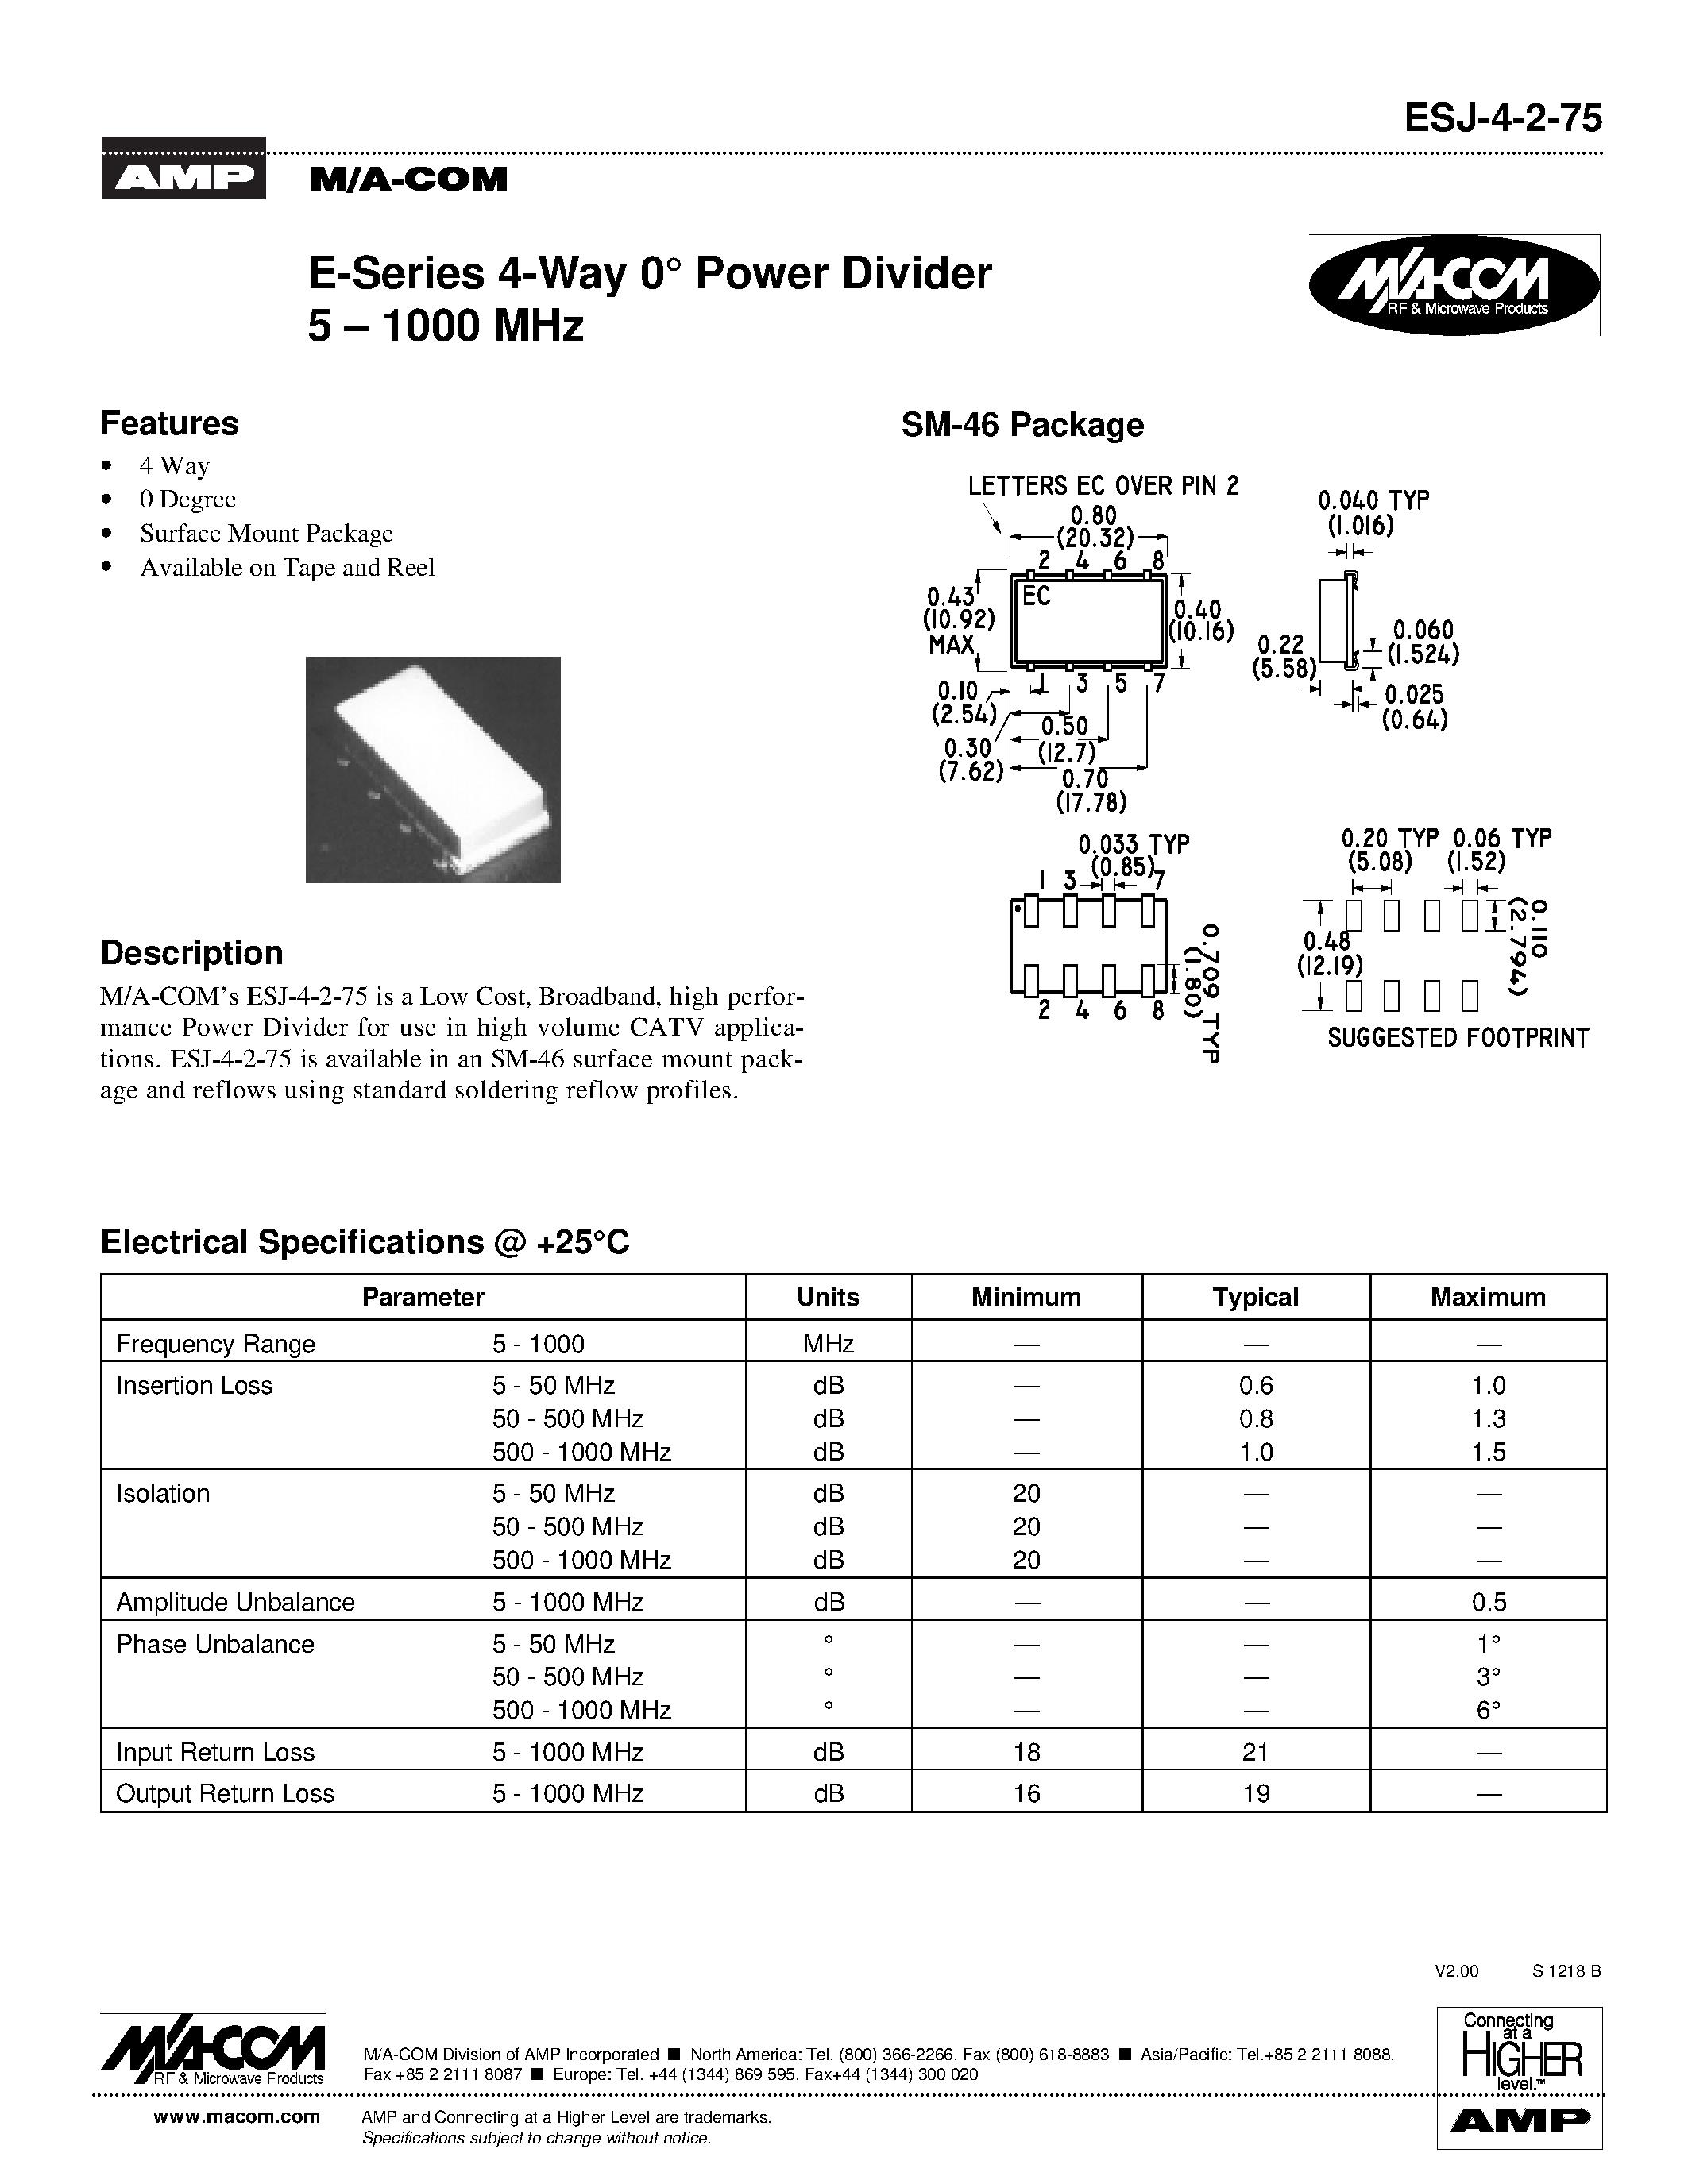 Datasheet ESJ-4-2-75 - E-Series 4-Way 0 Power Divider 5 - 1000 MHz page 1